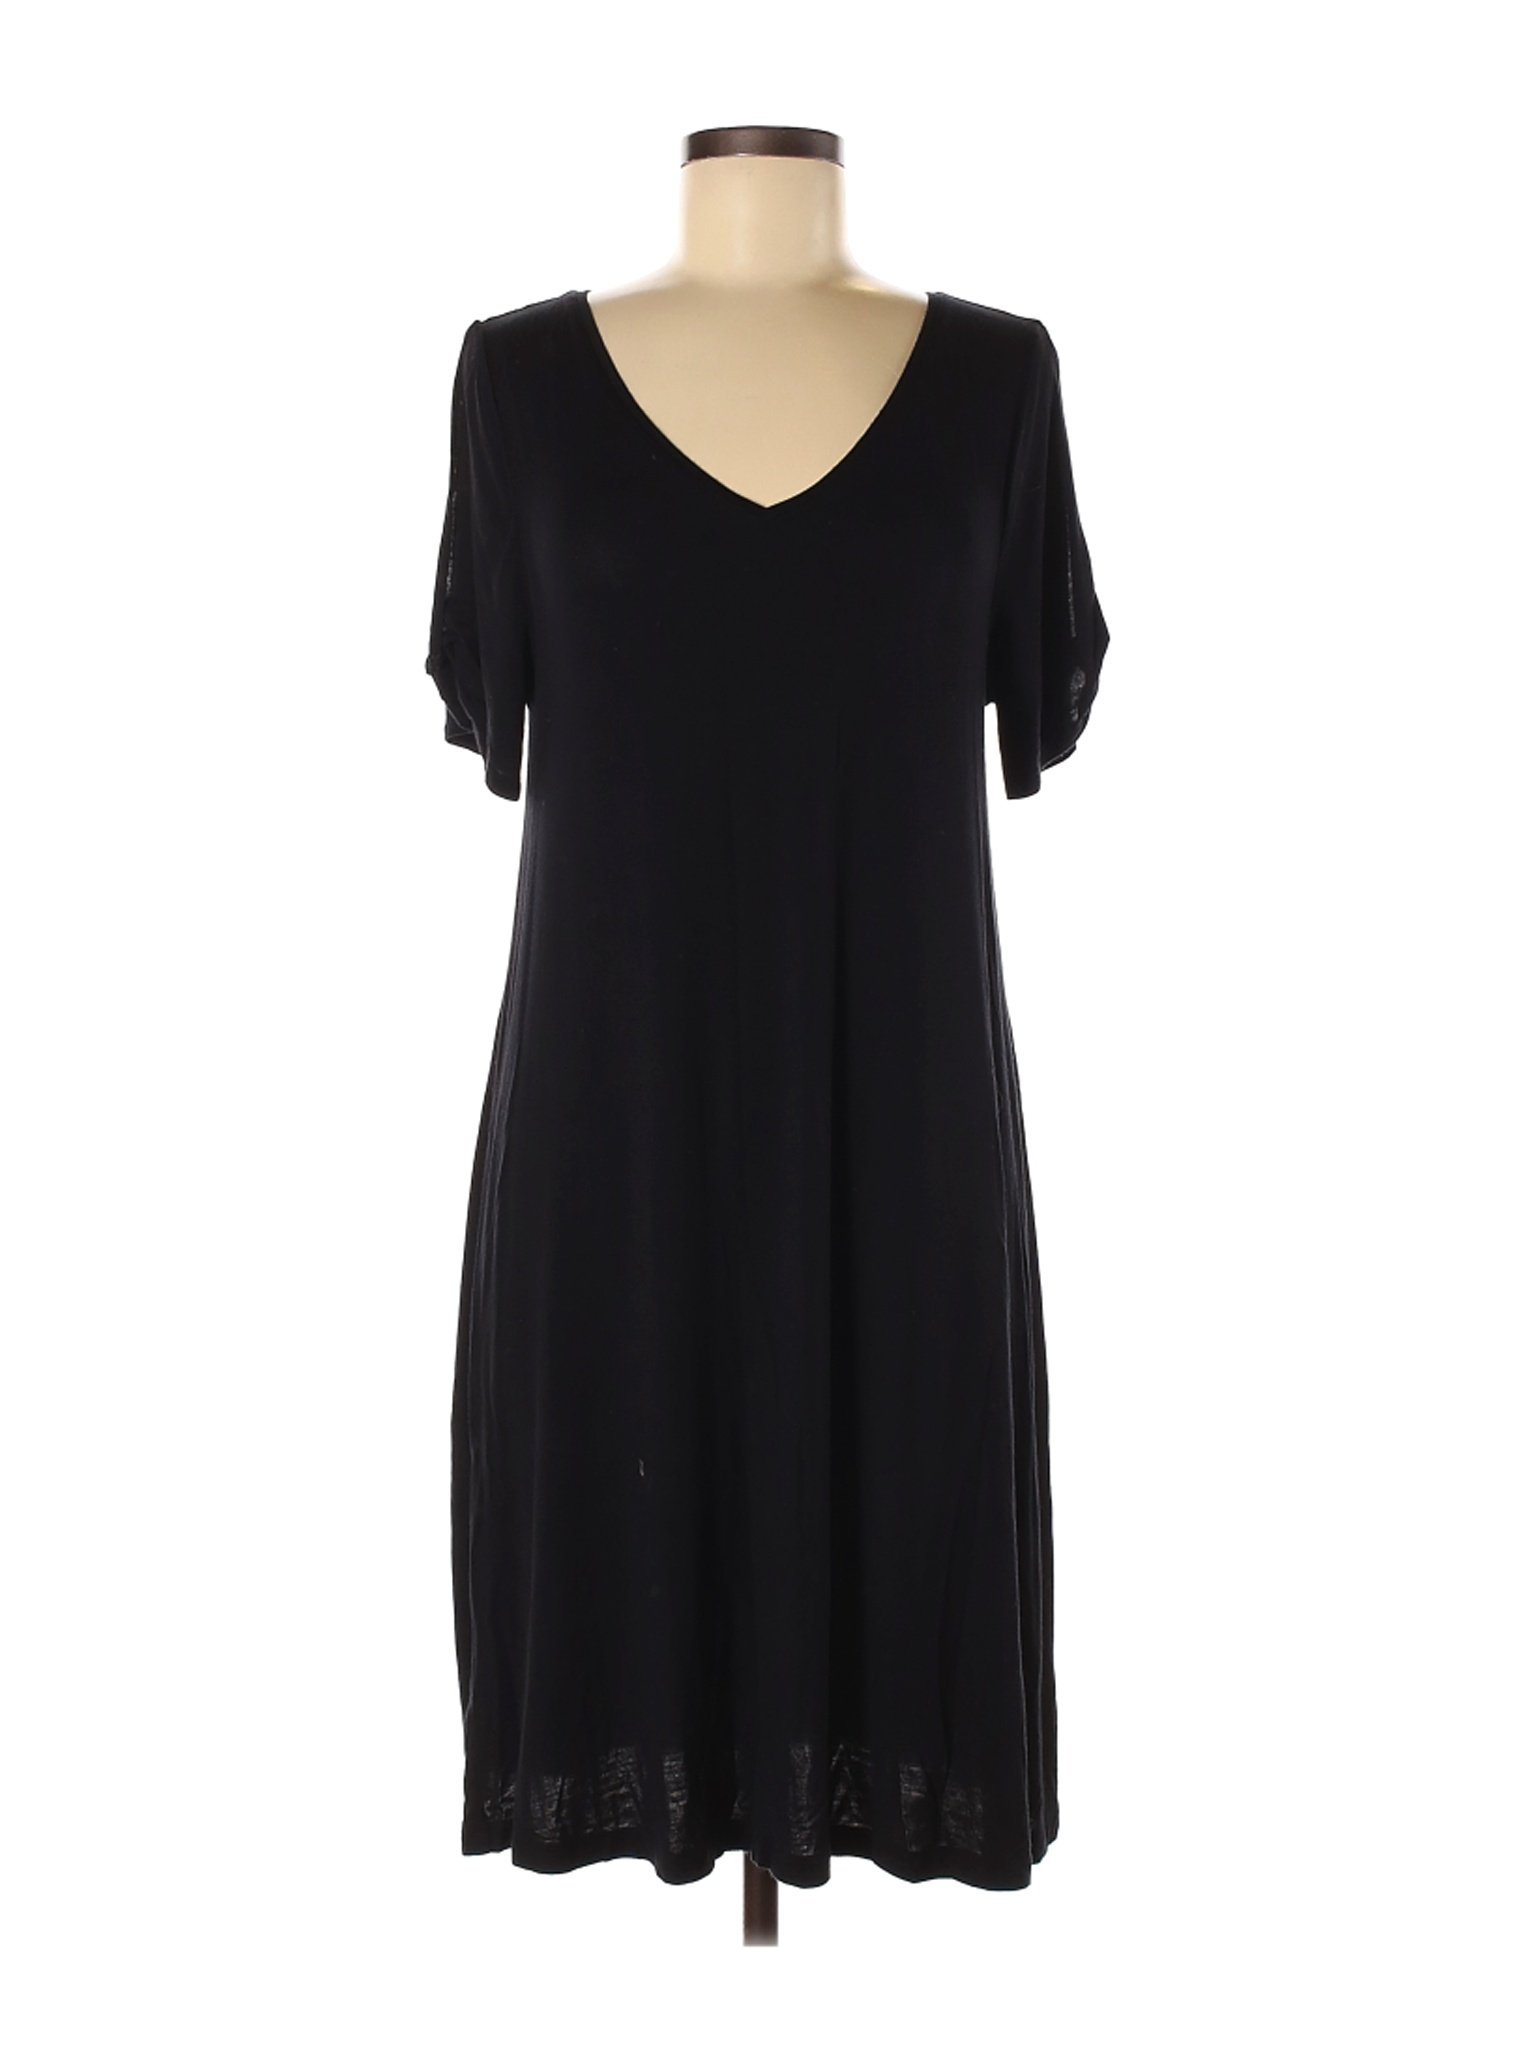 Apt. 9 Women Black Casual Dress M | eBay